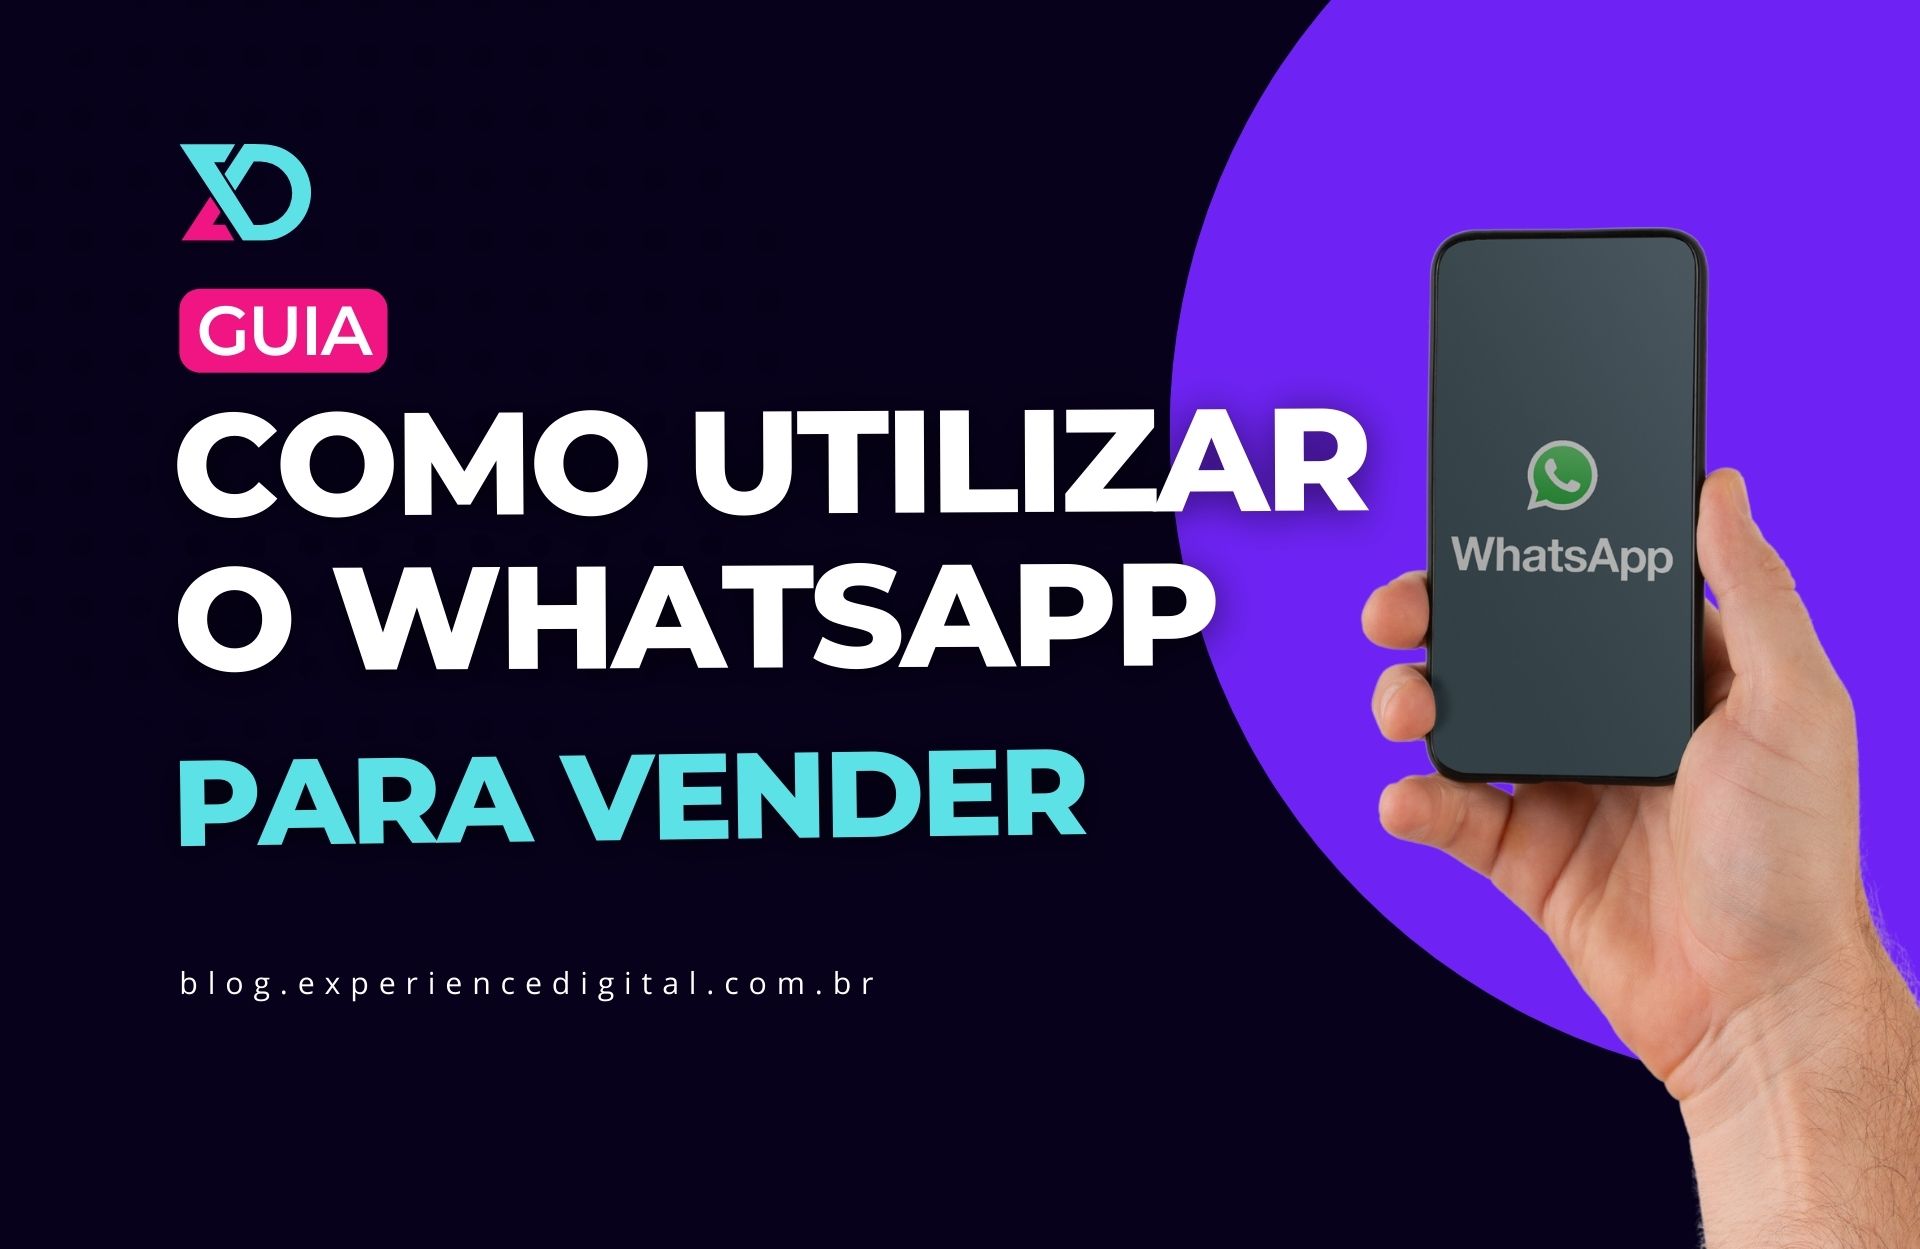 Blog Xd Guia De Como Utilizar O Whatsapp Para Vender 0361